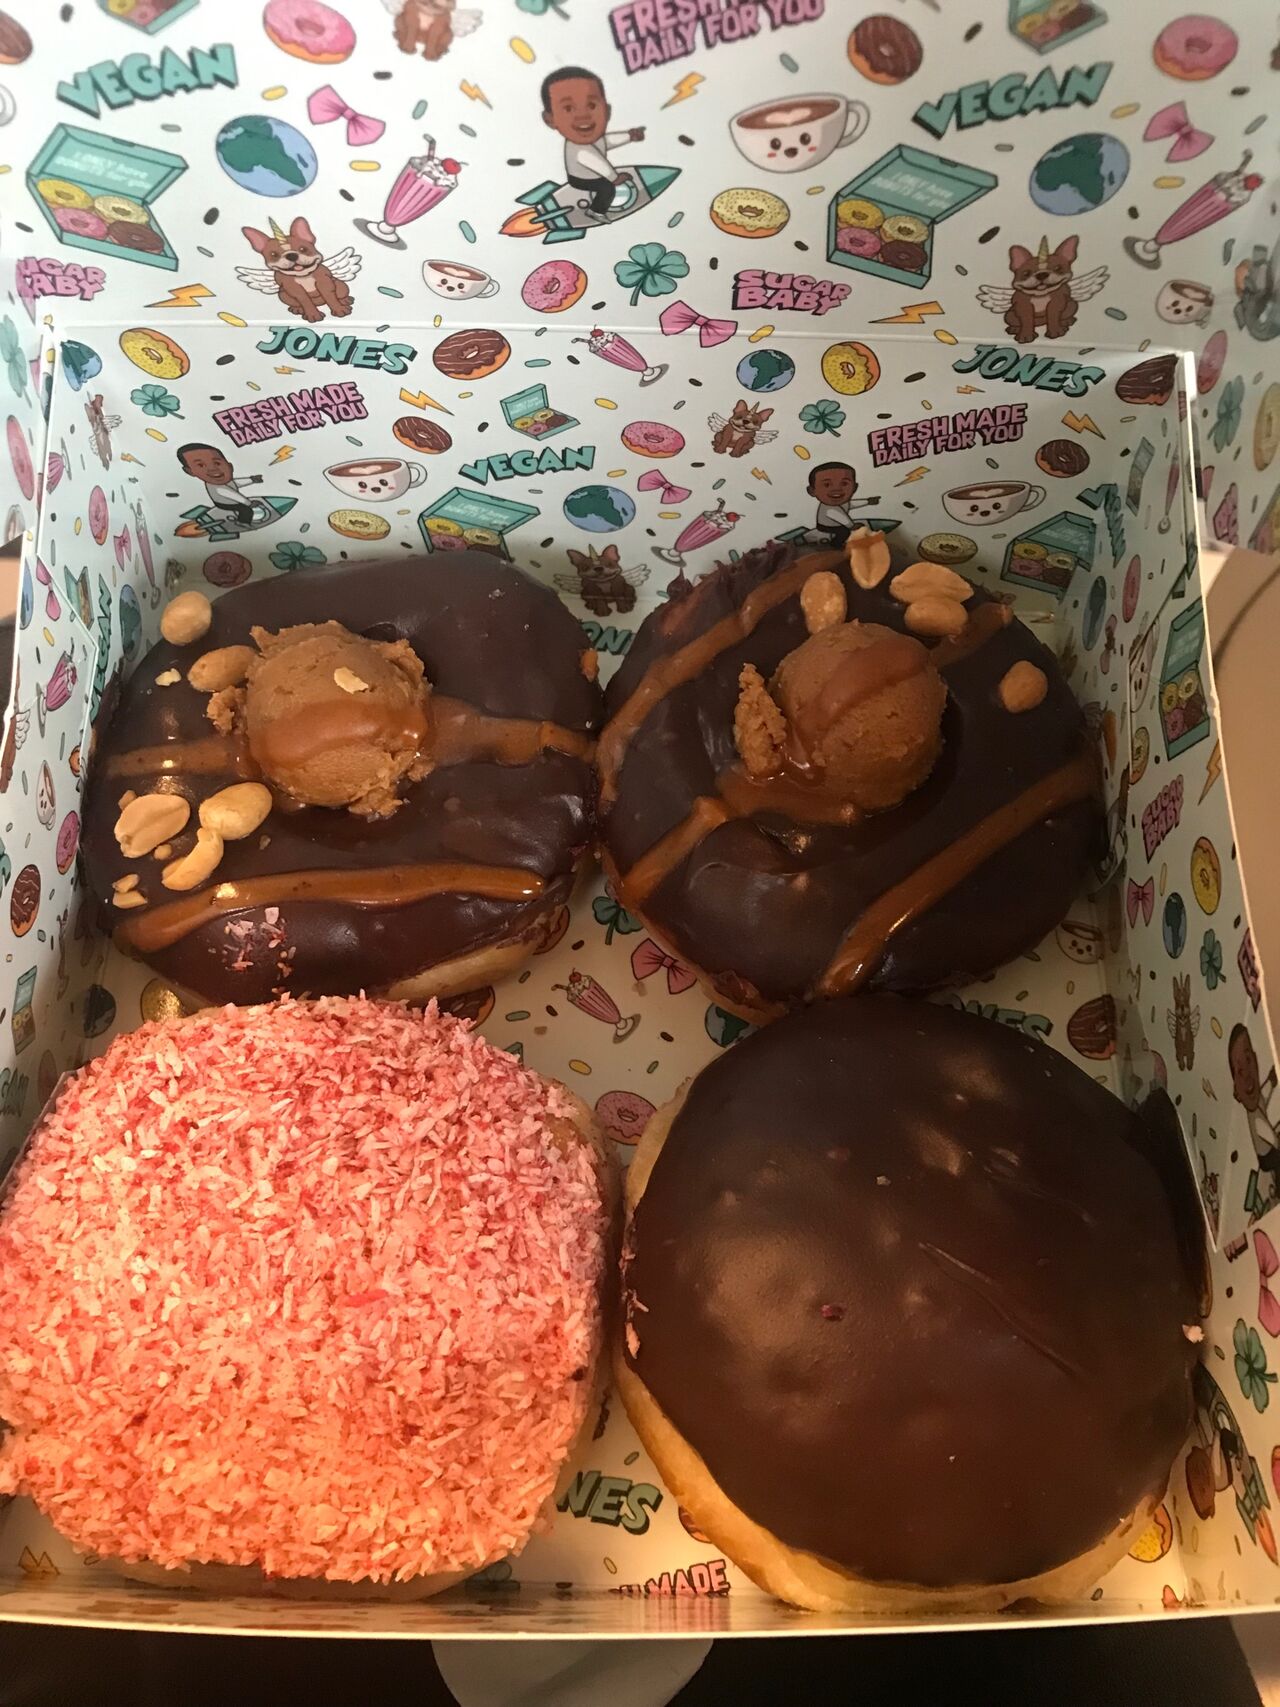 A photo of Jones Donuts